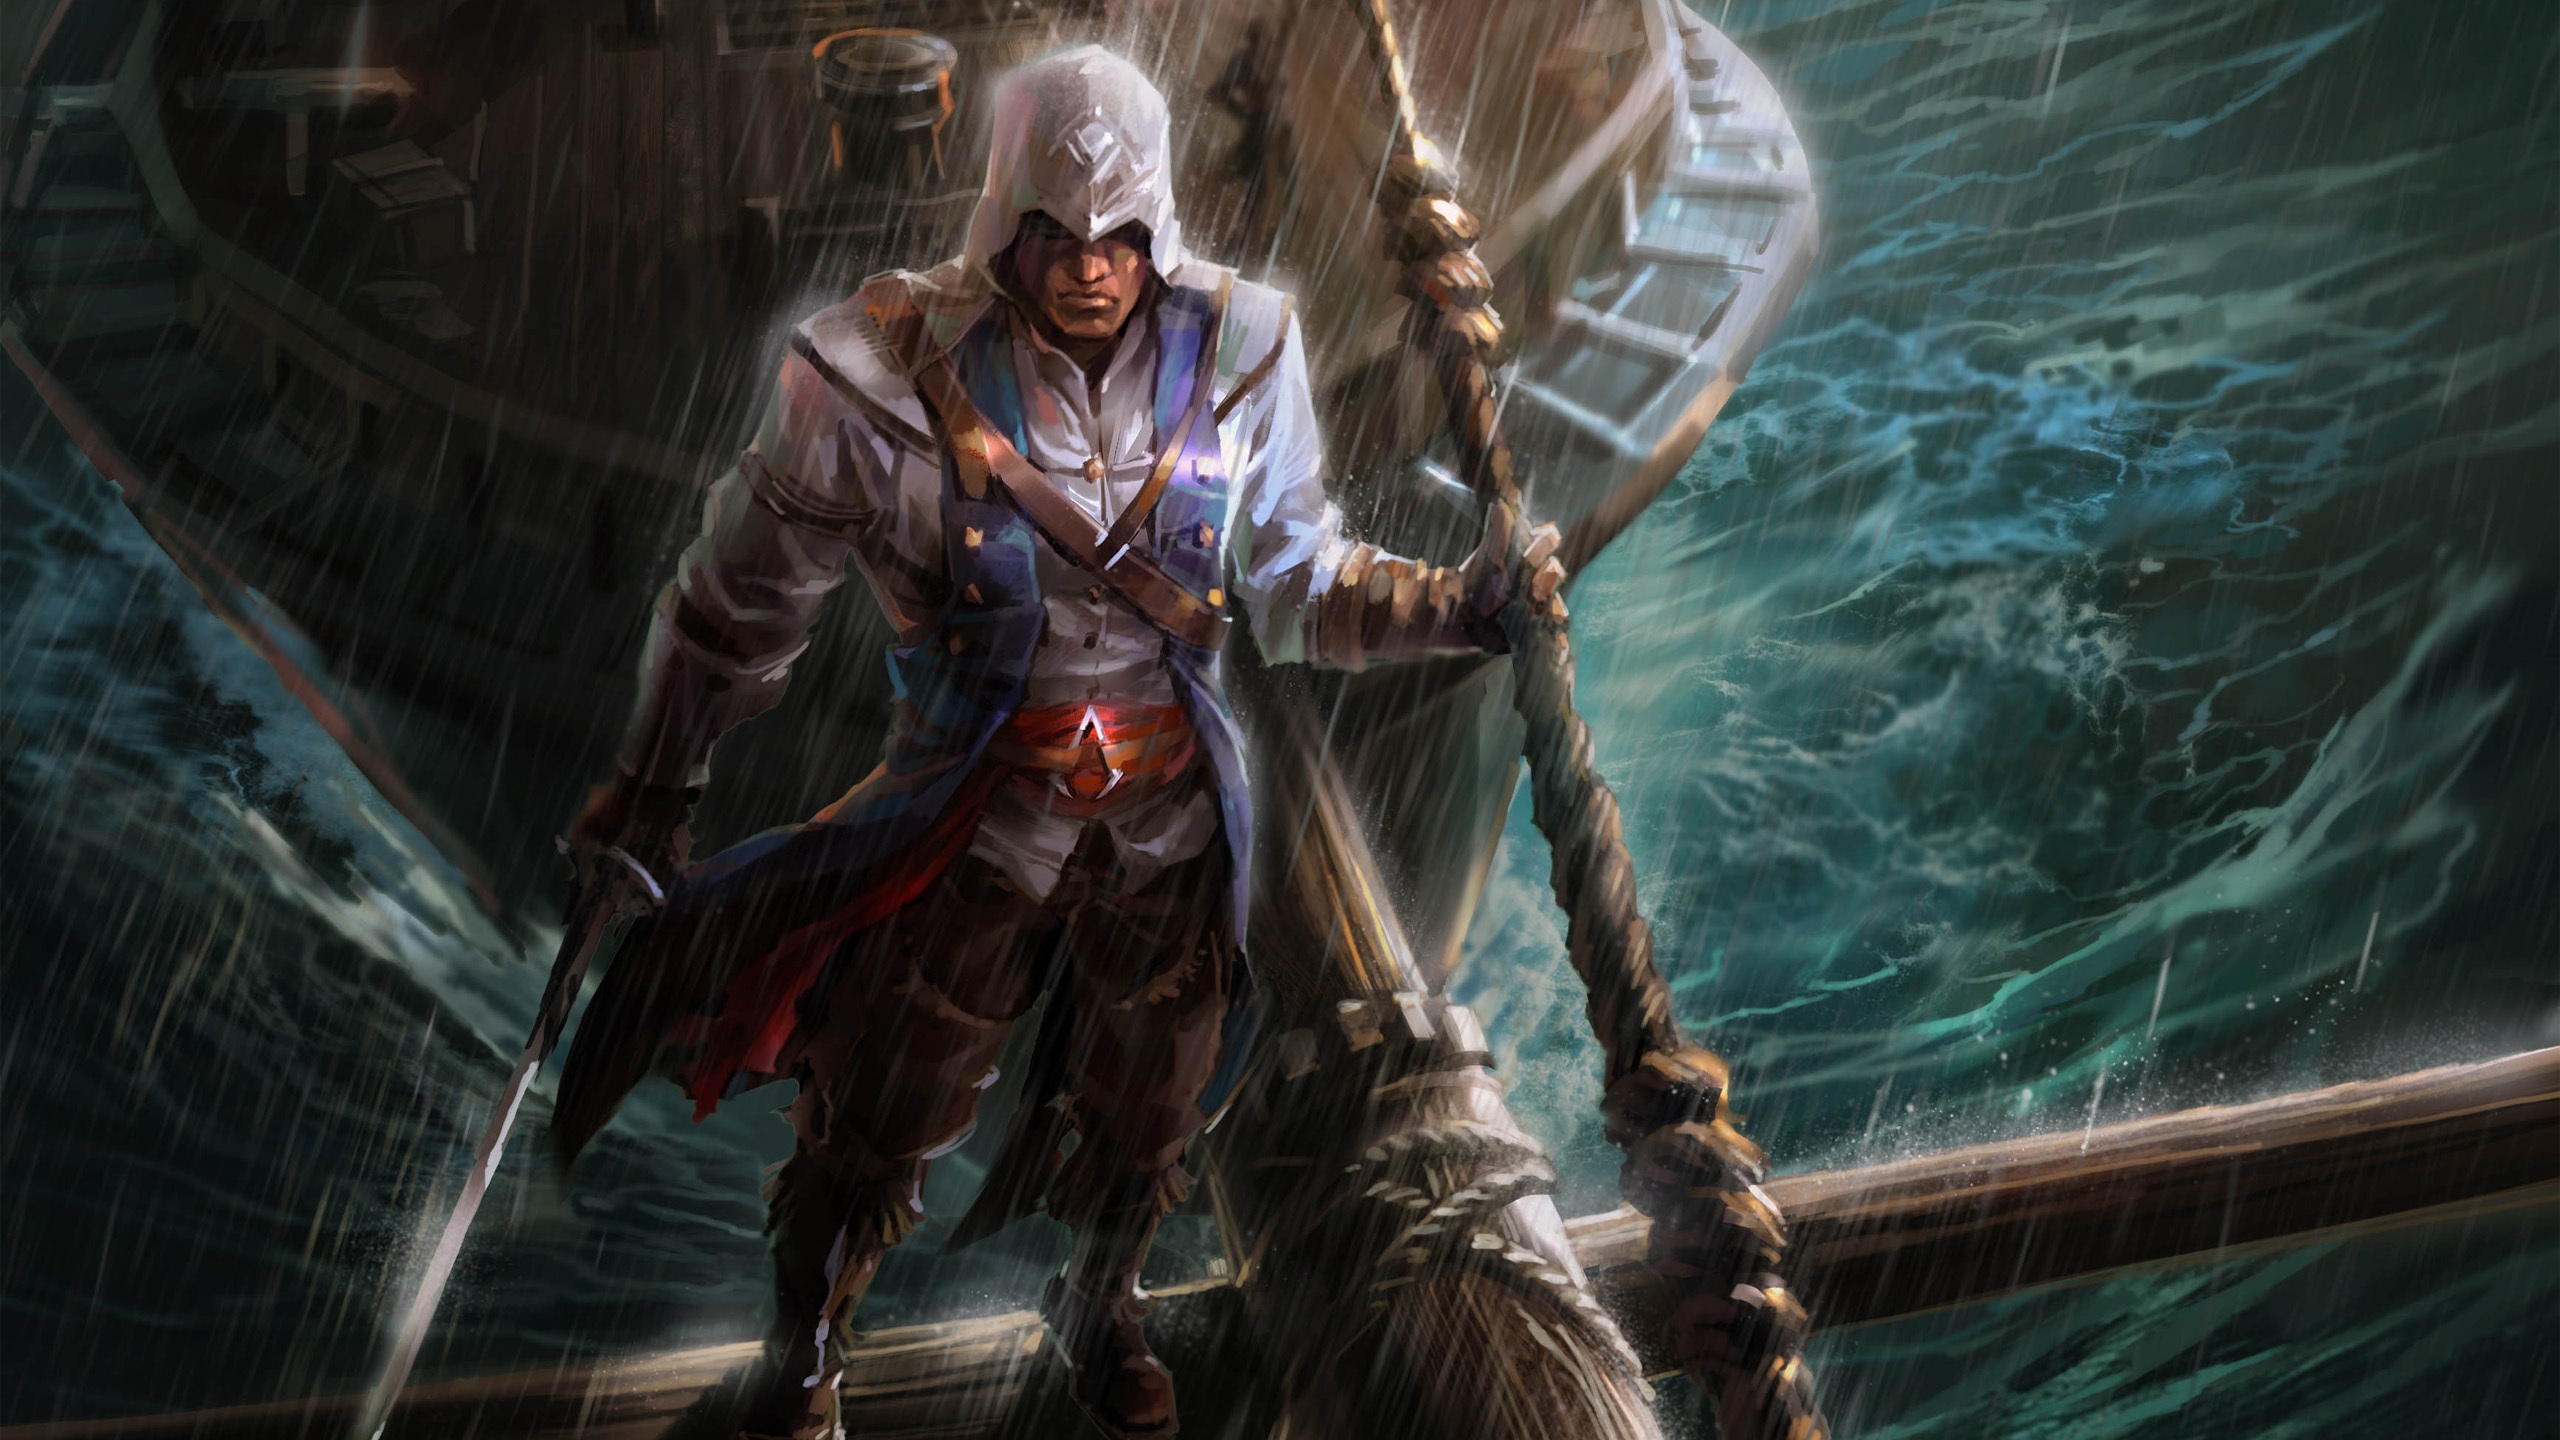 Assassins Creed Fan Art for 2560x1440 HDTV resolution